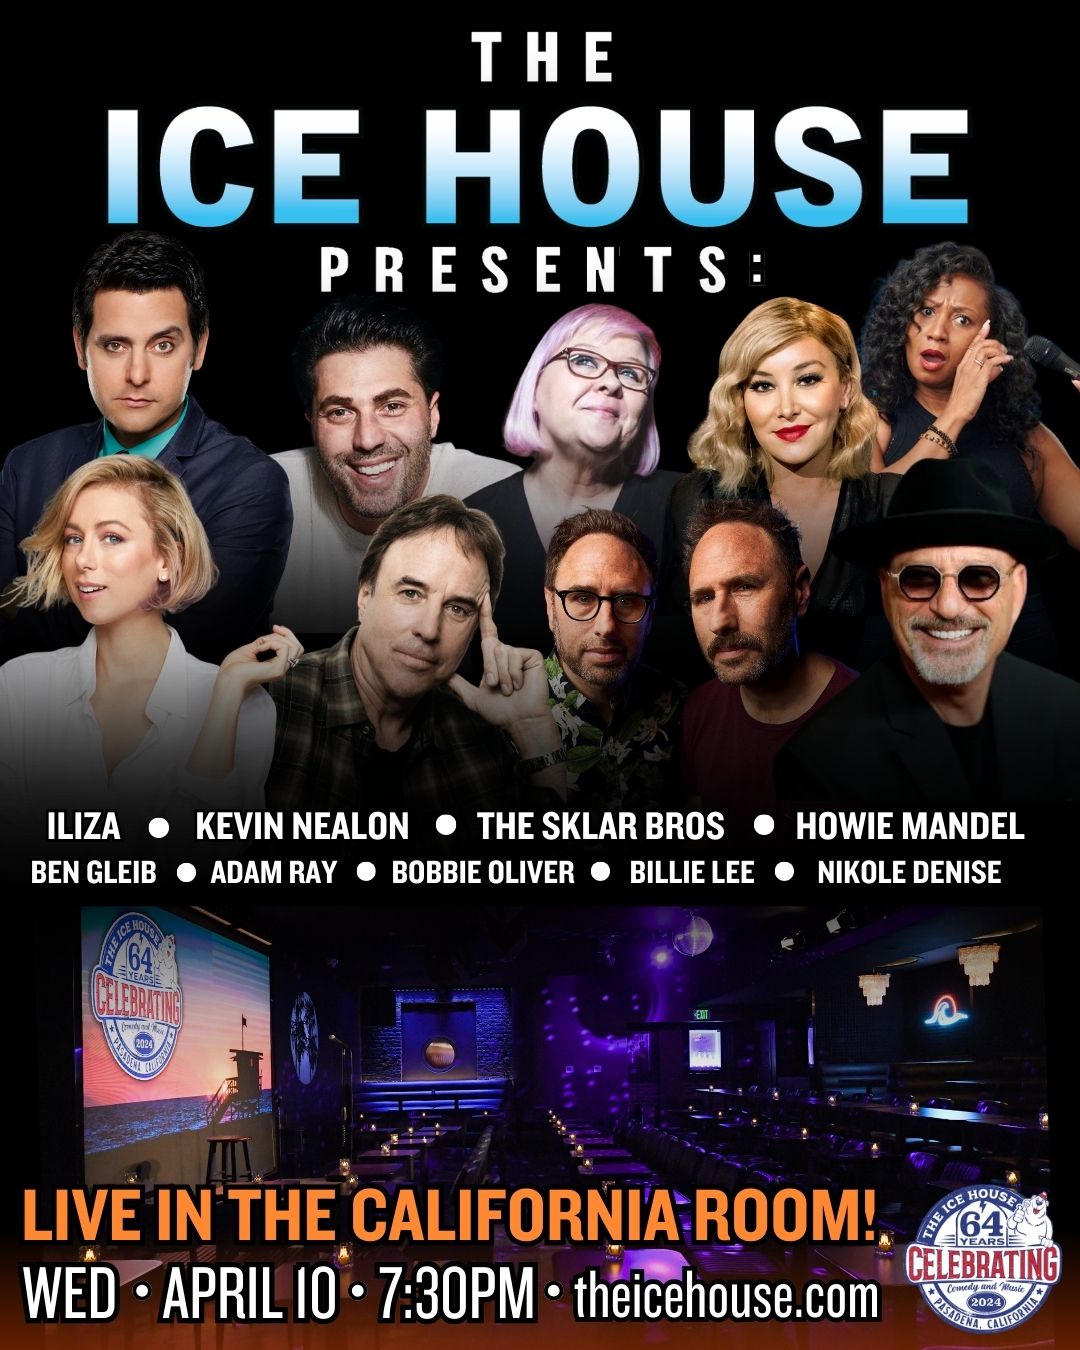 Ice house 7:30PM